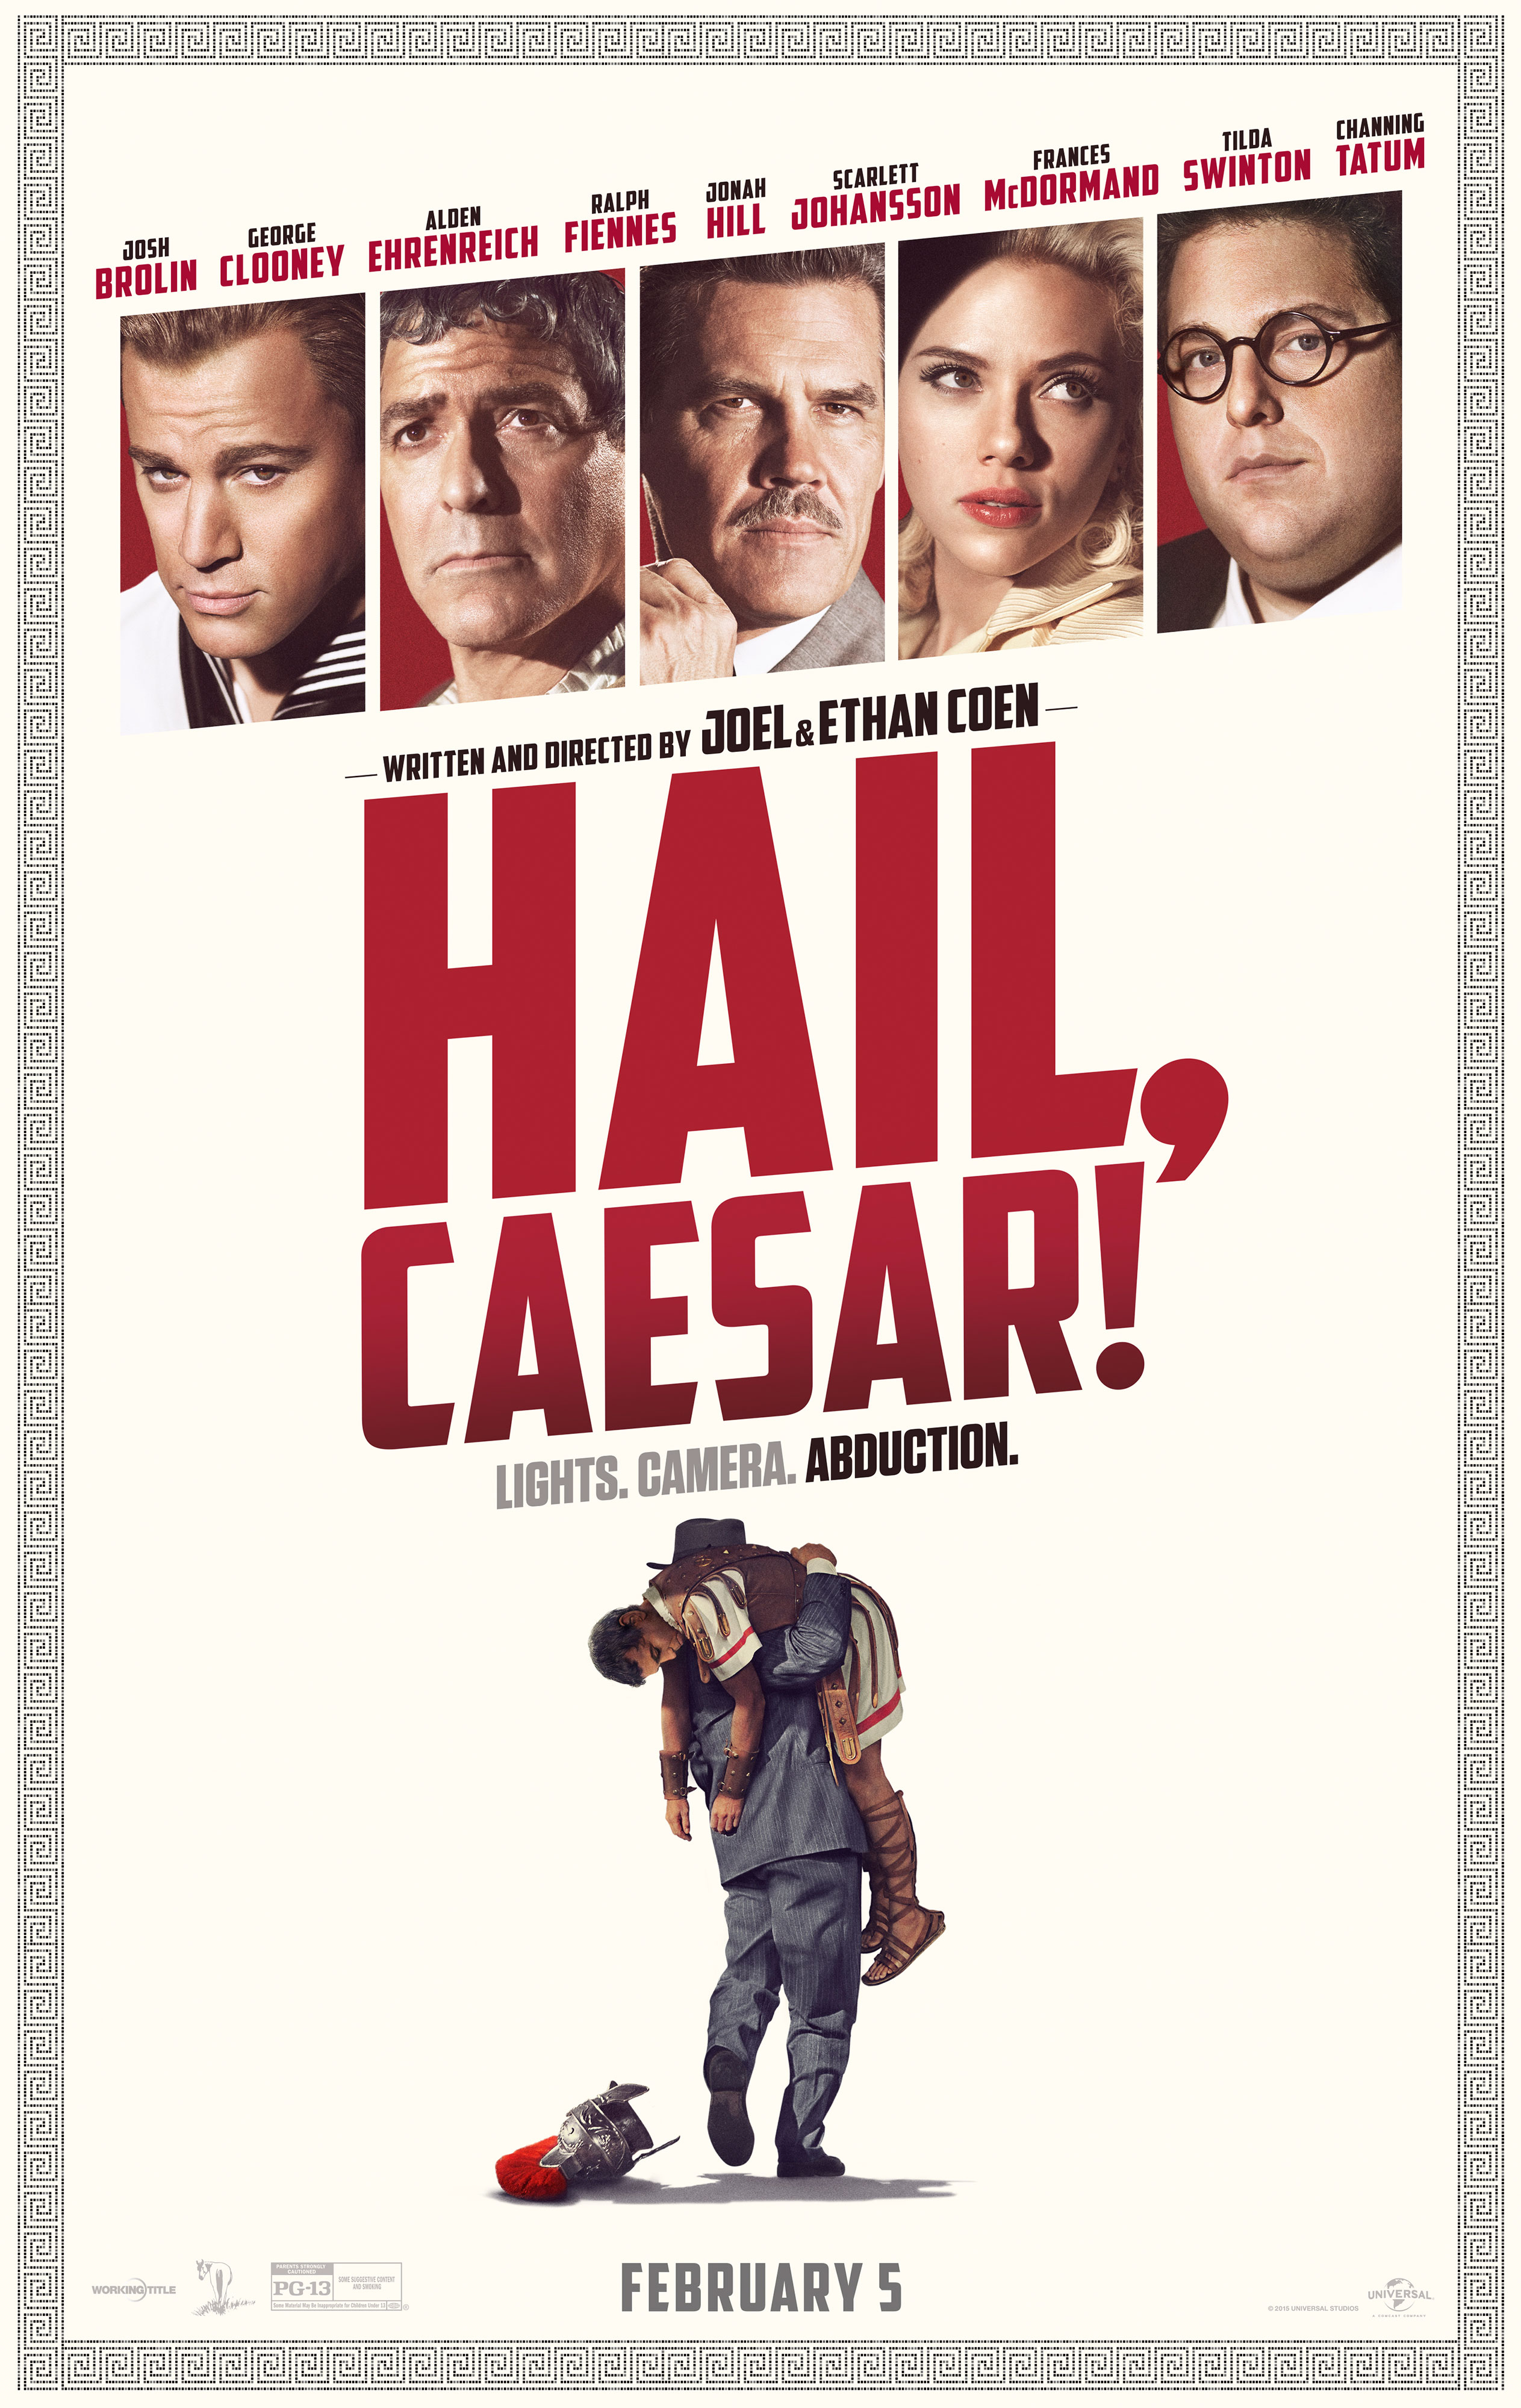 George Clooney, Josh Brolin, Scarlett Johansson, Channing Tatum and Jonah Hill in Slove Cezariui! (2016)